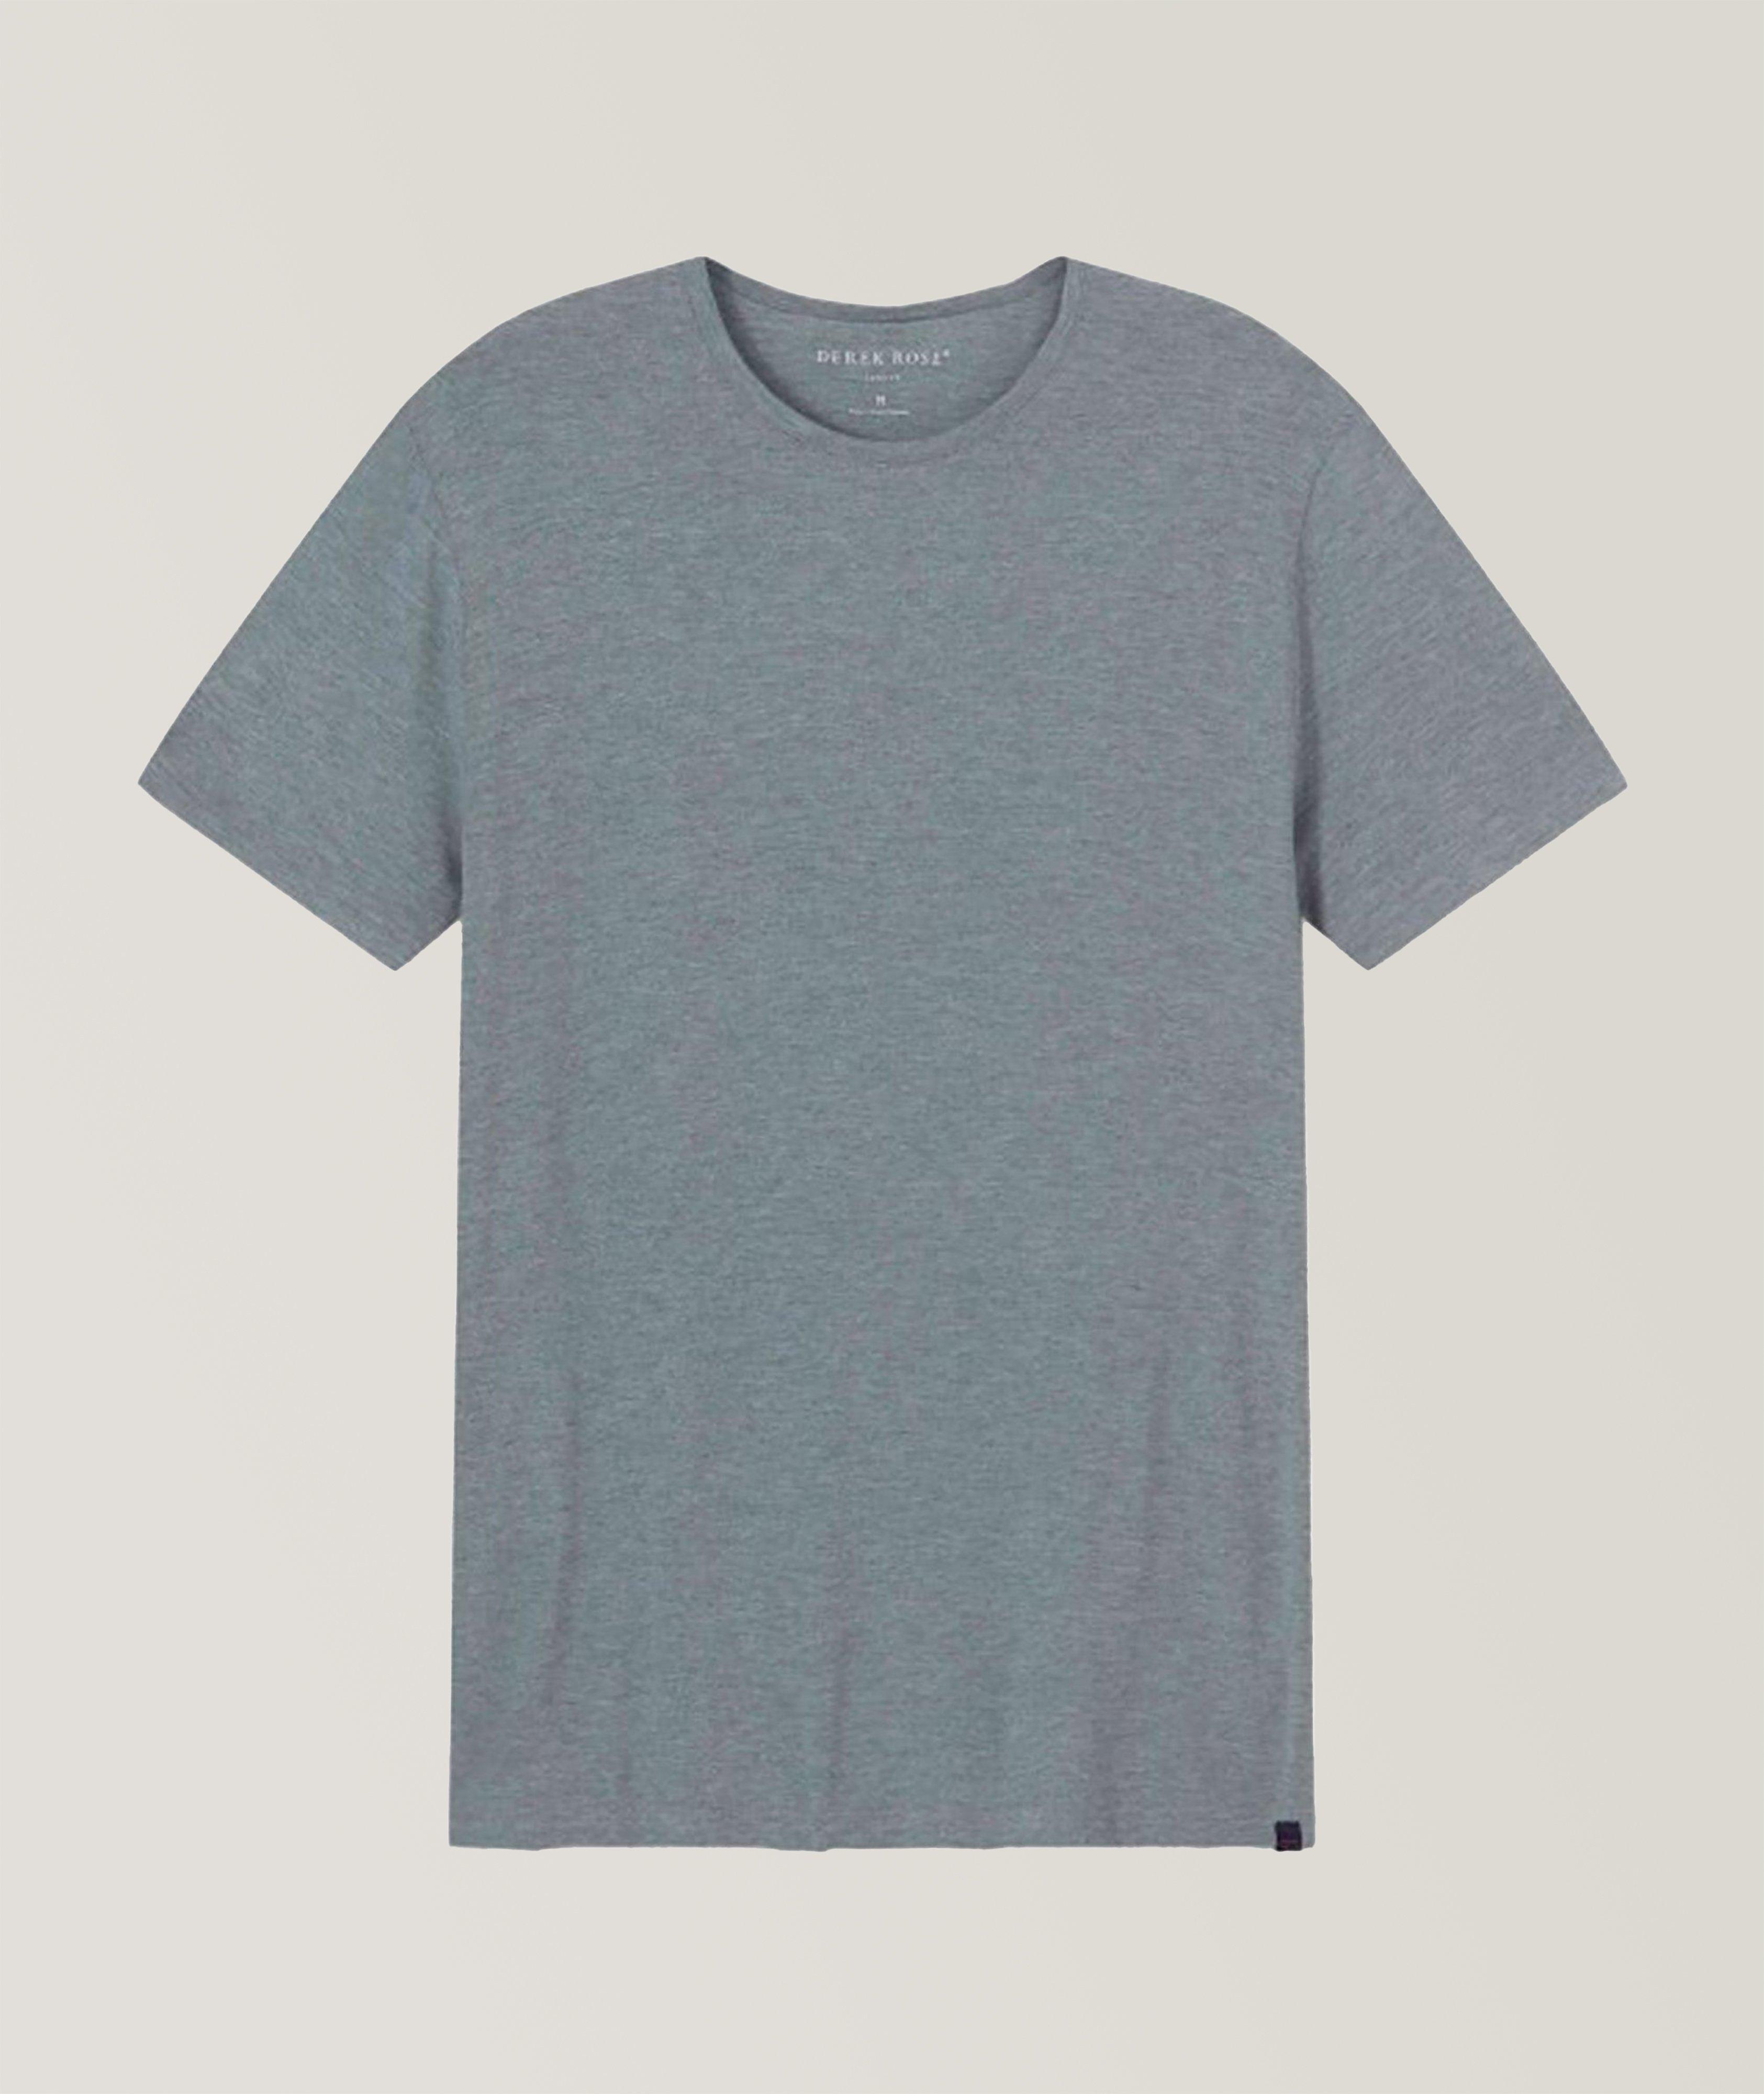 Basel Micro Modal T-Shirt image 0